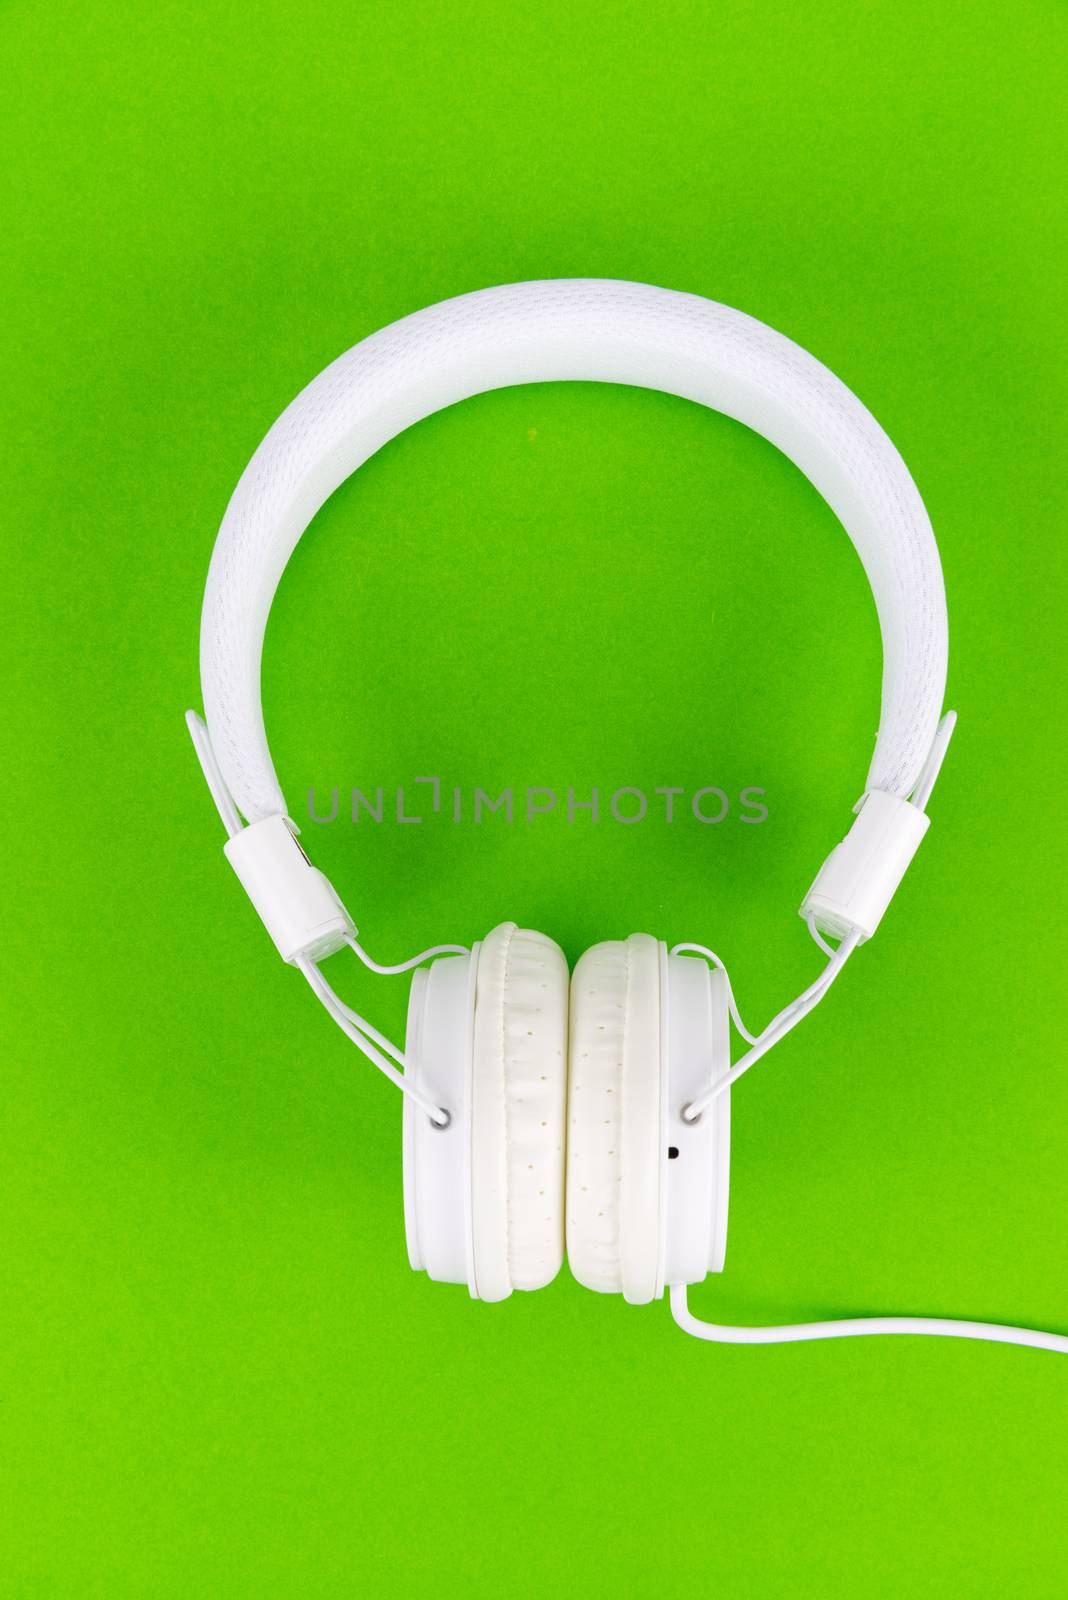 White headphone on green background